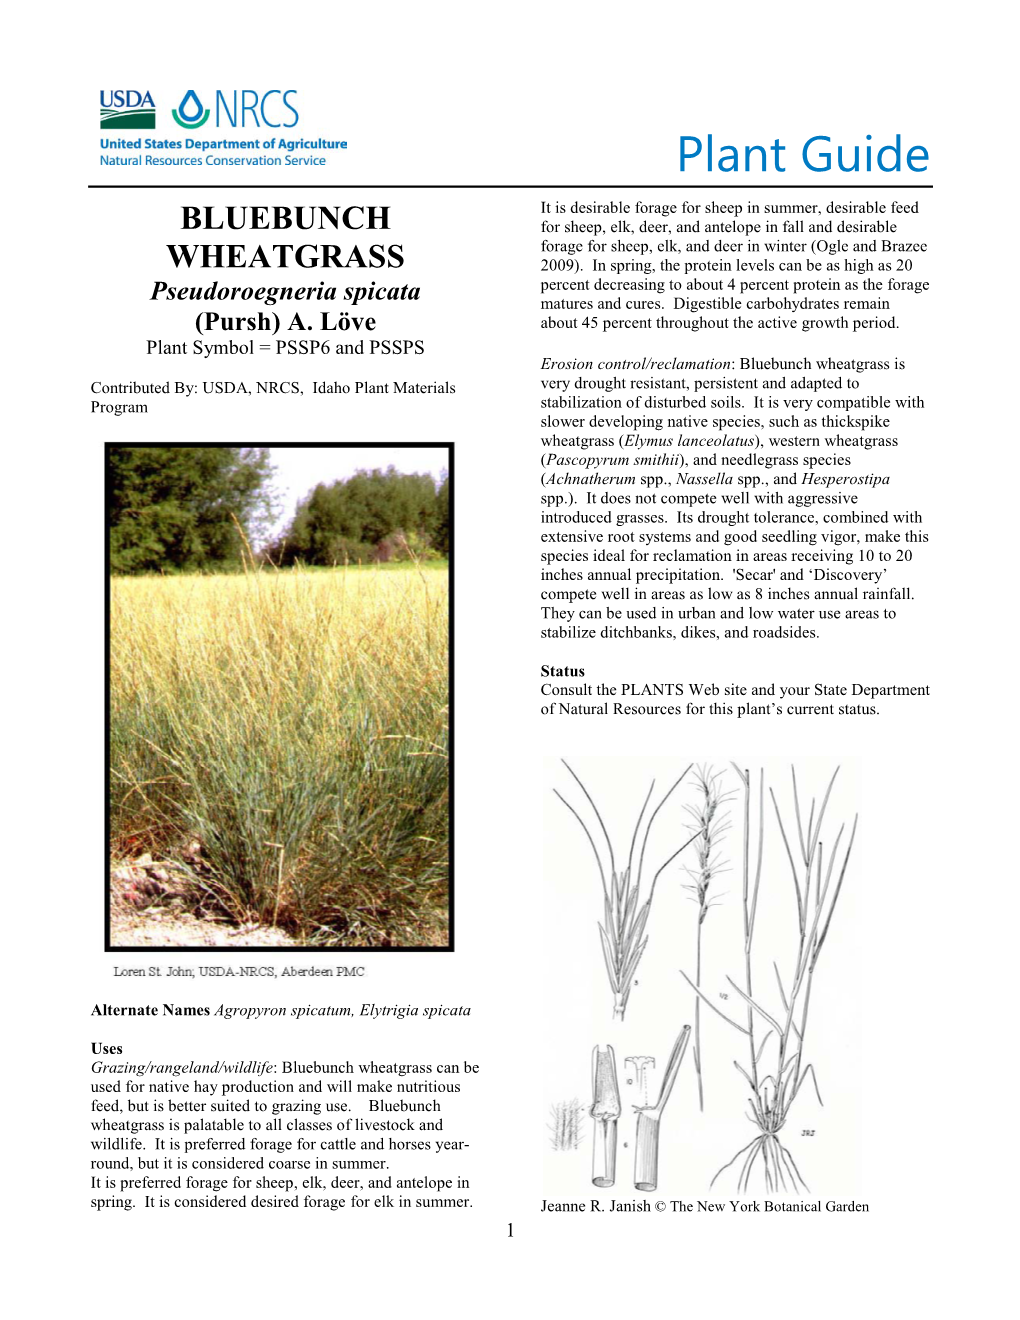 Bluebunch Wheatgrass (Pseudoroegneria Spicata) Plant